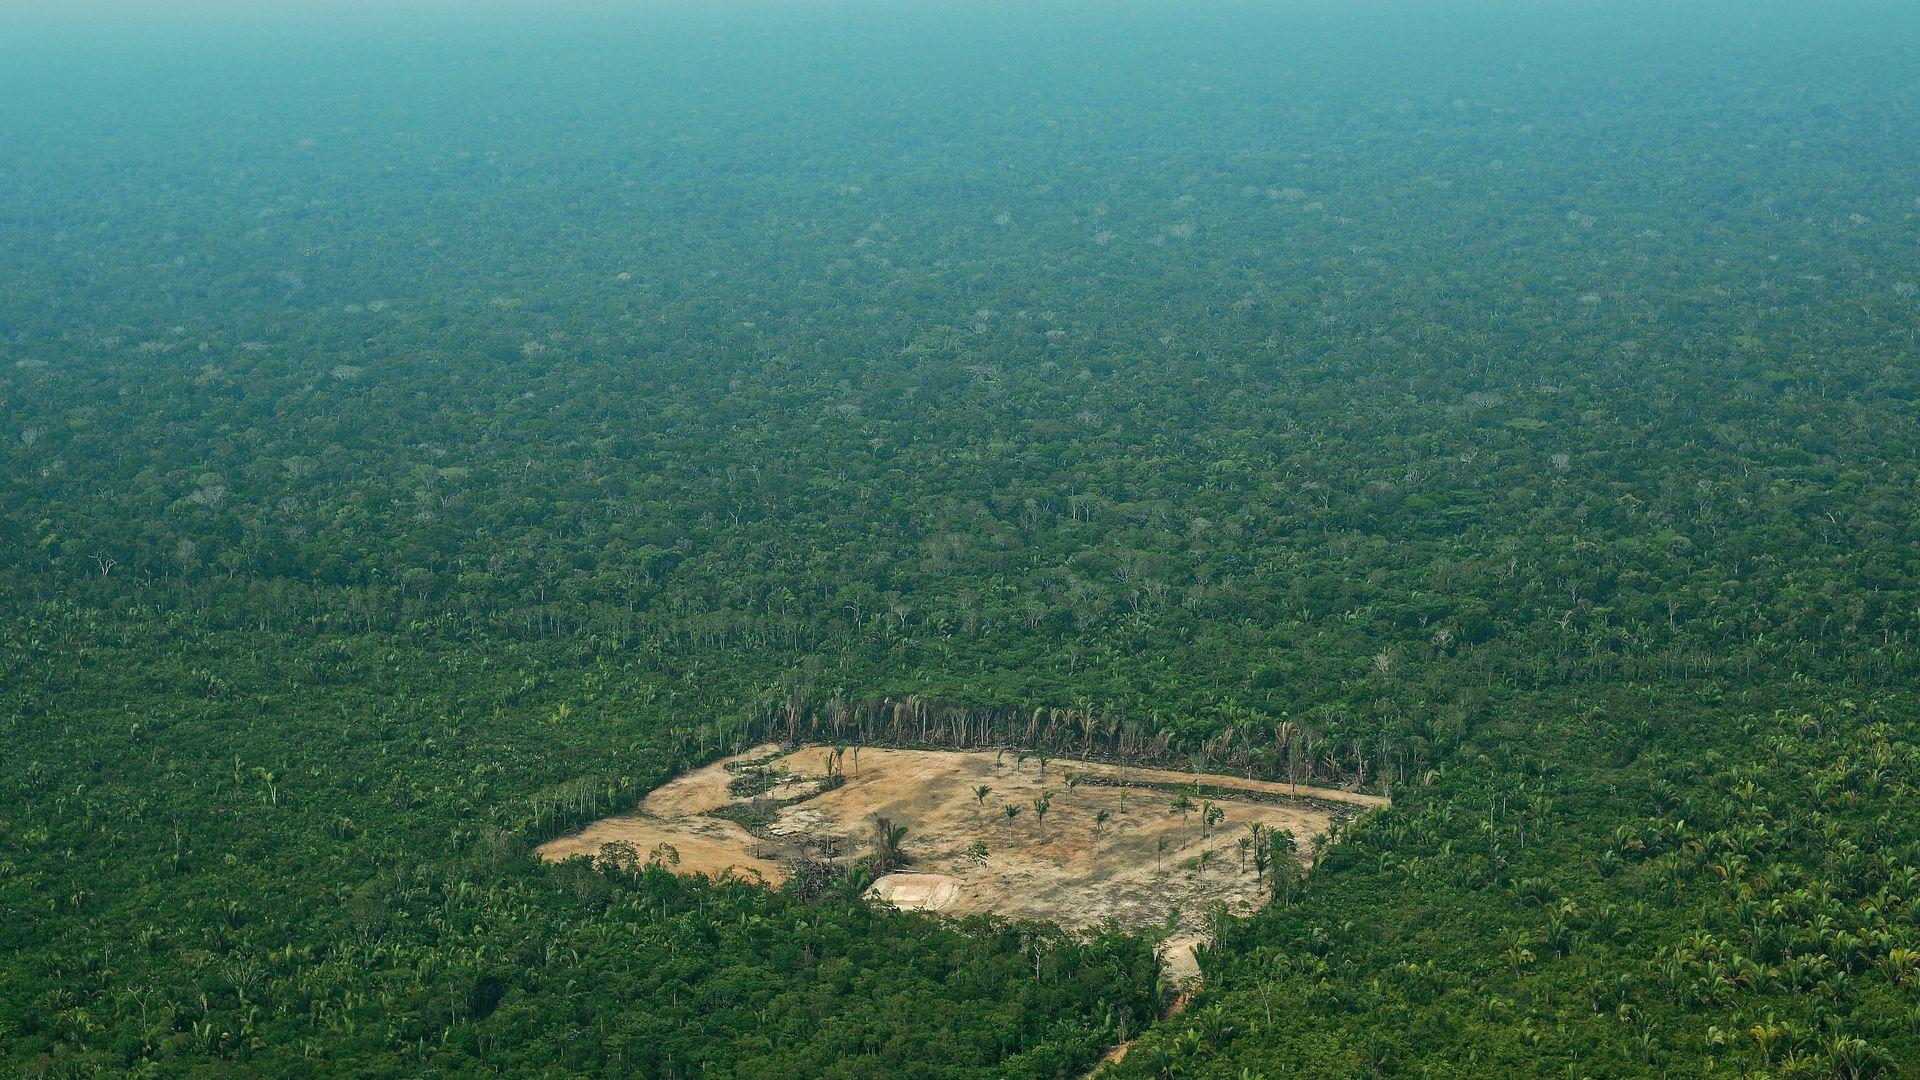 Deforestation of Brazil's Amazon rainforest reaches decade